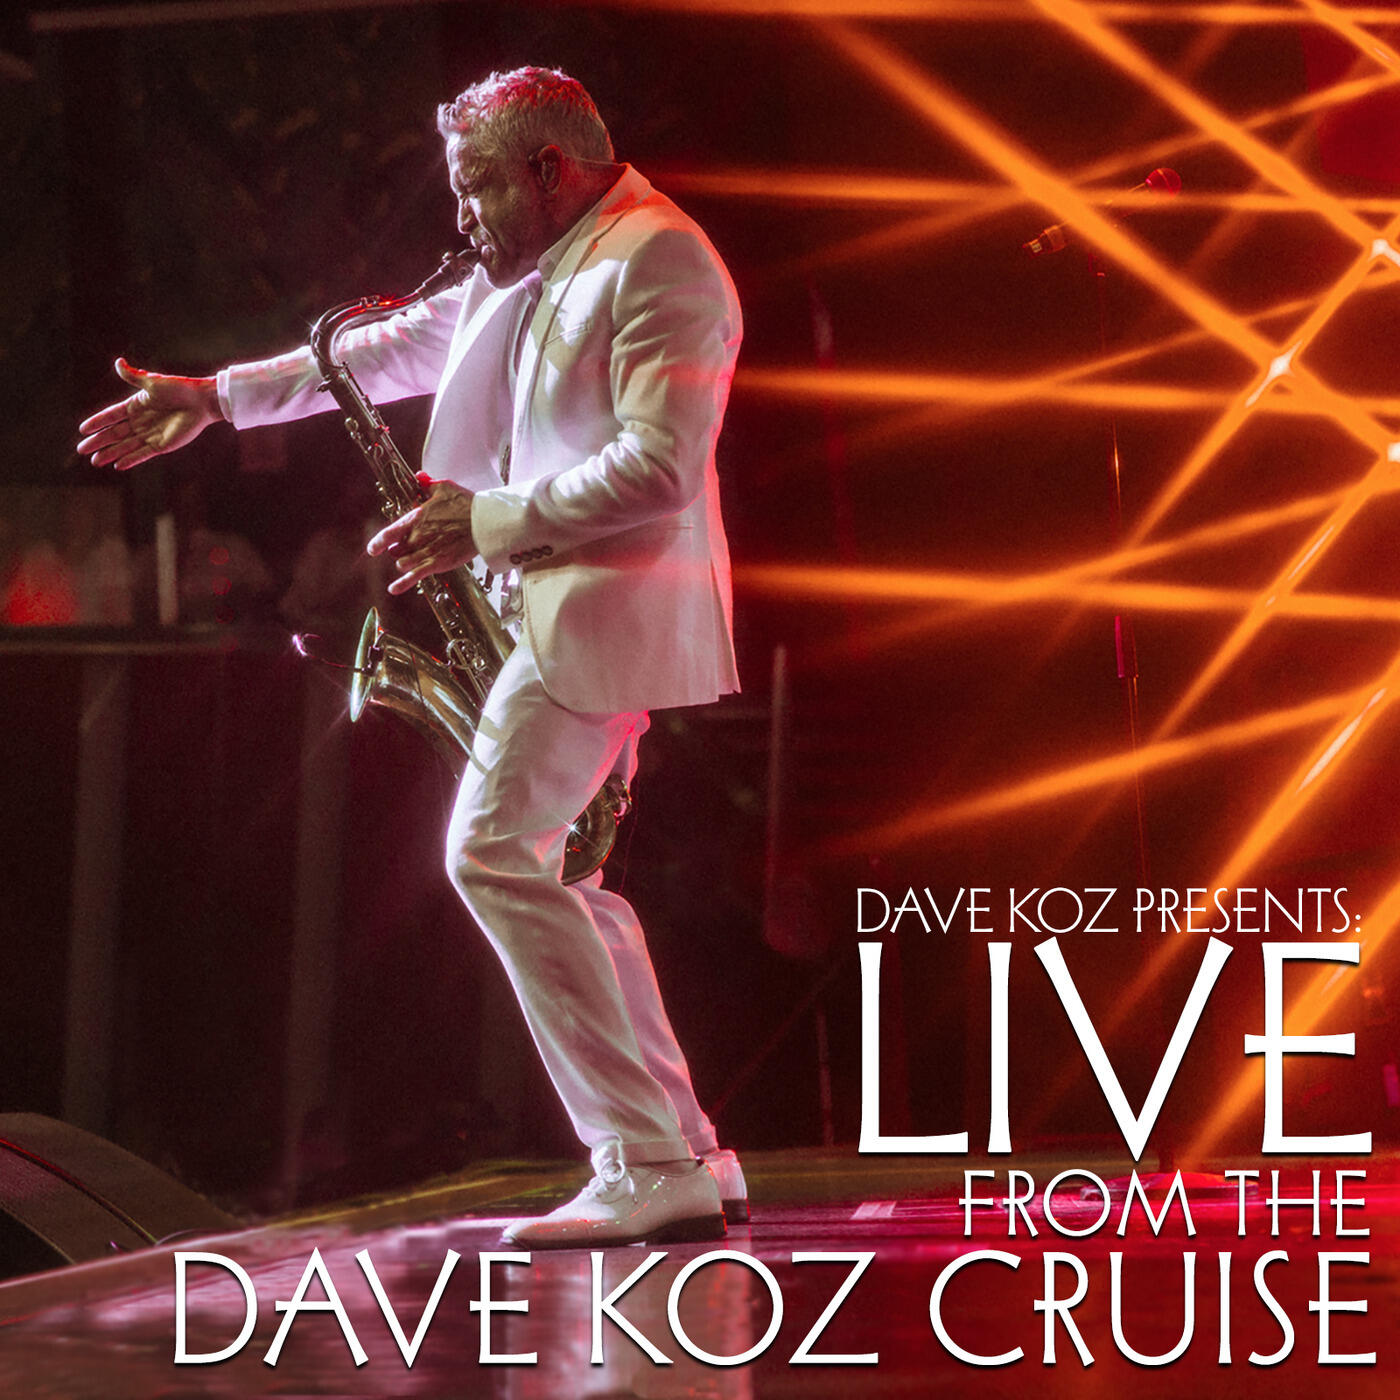 Dave Koz - Dave Koz Presents: Live from the Dave Koz Cruise | iHeartRadio